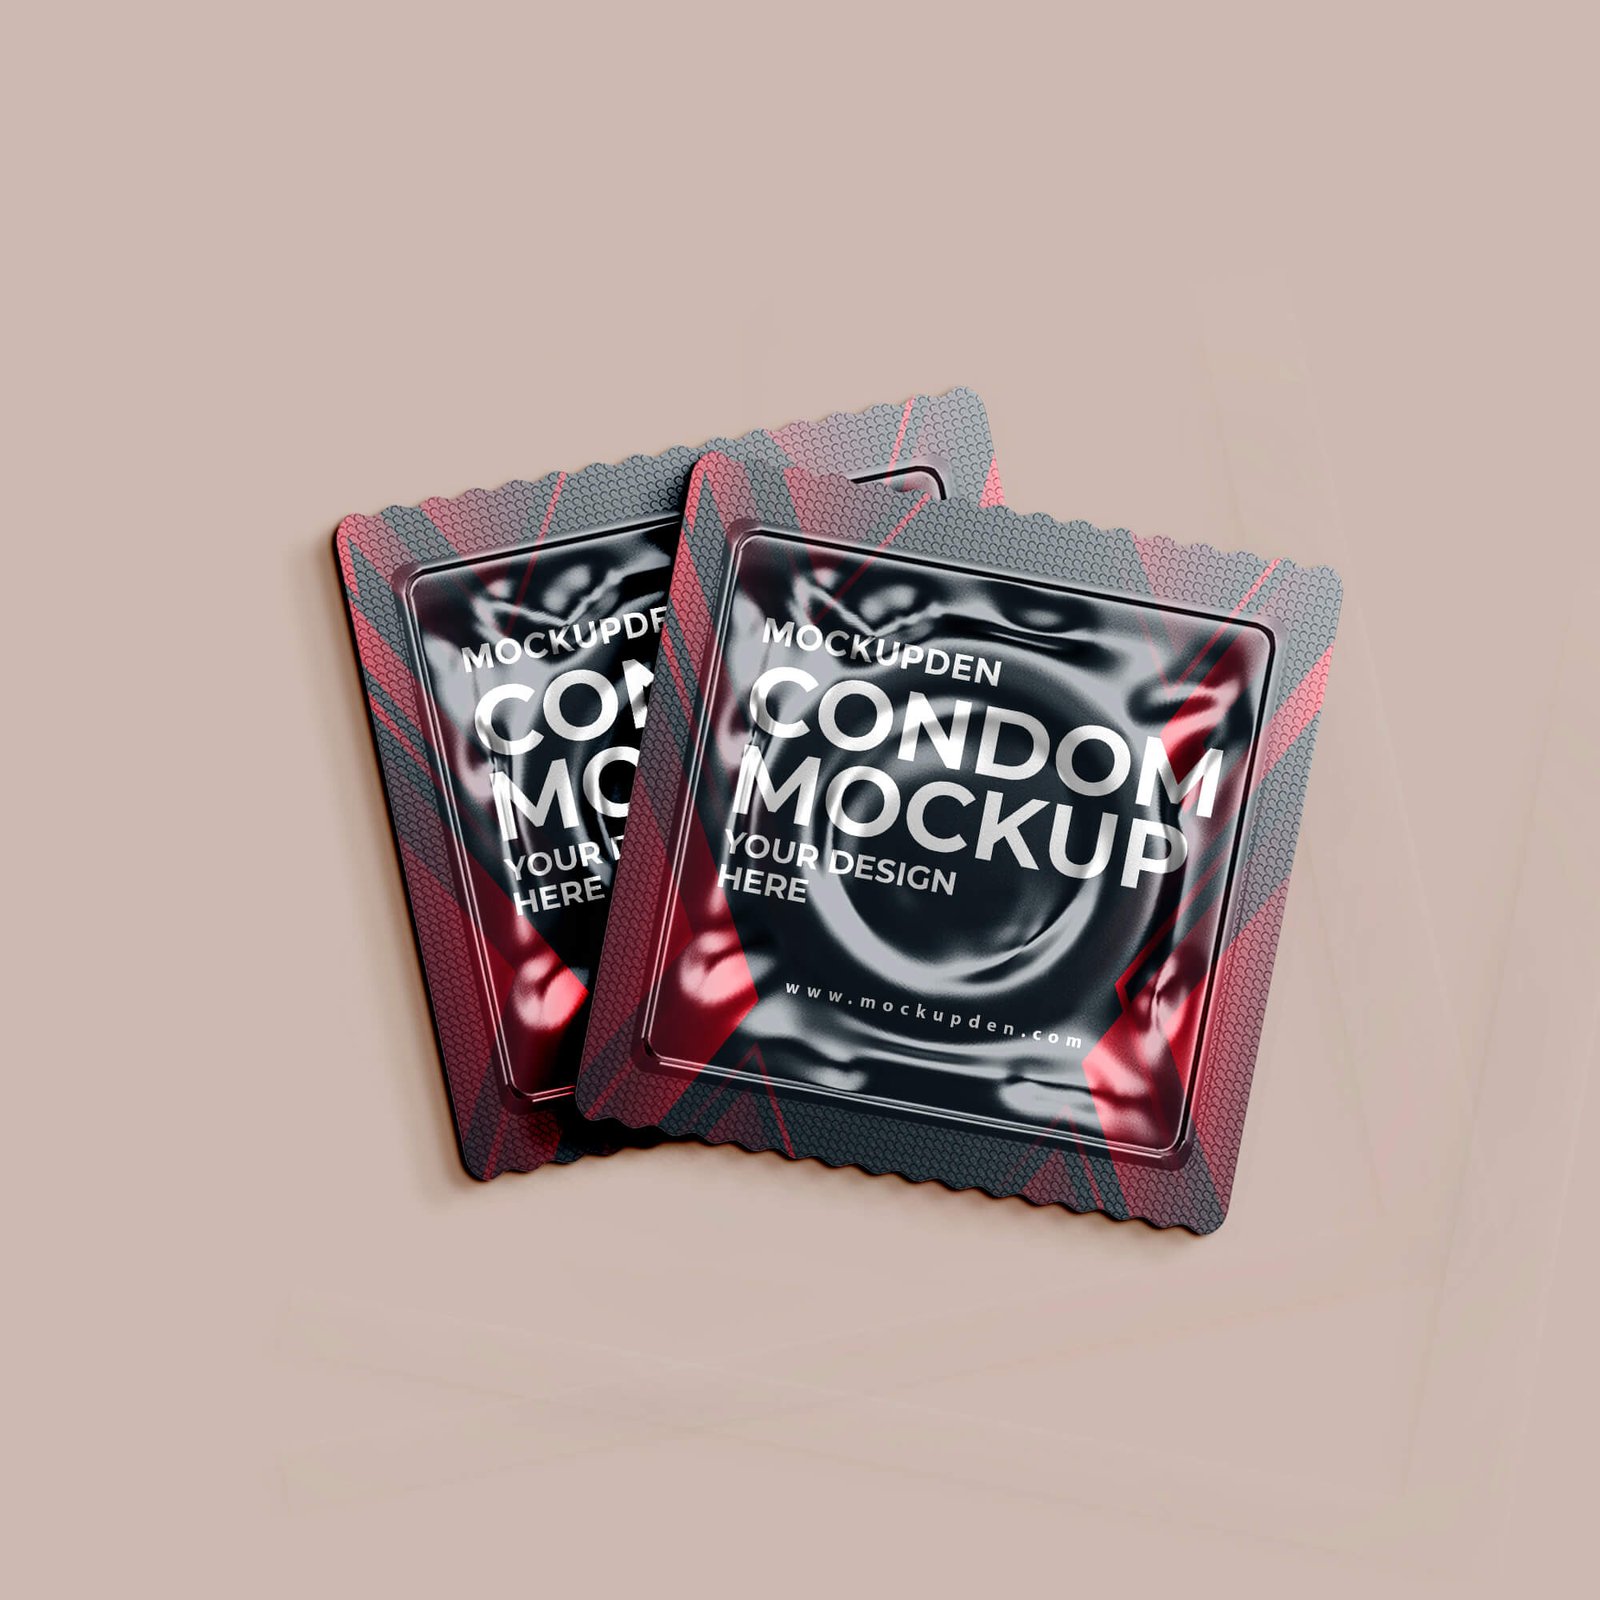 Design Free Condom Mockup PSD Template